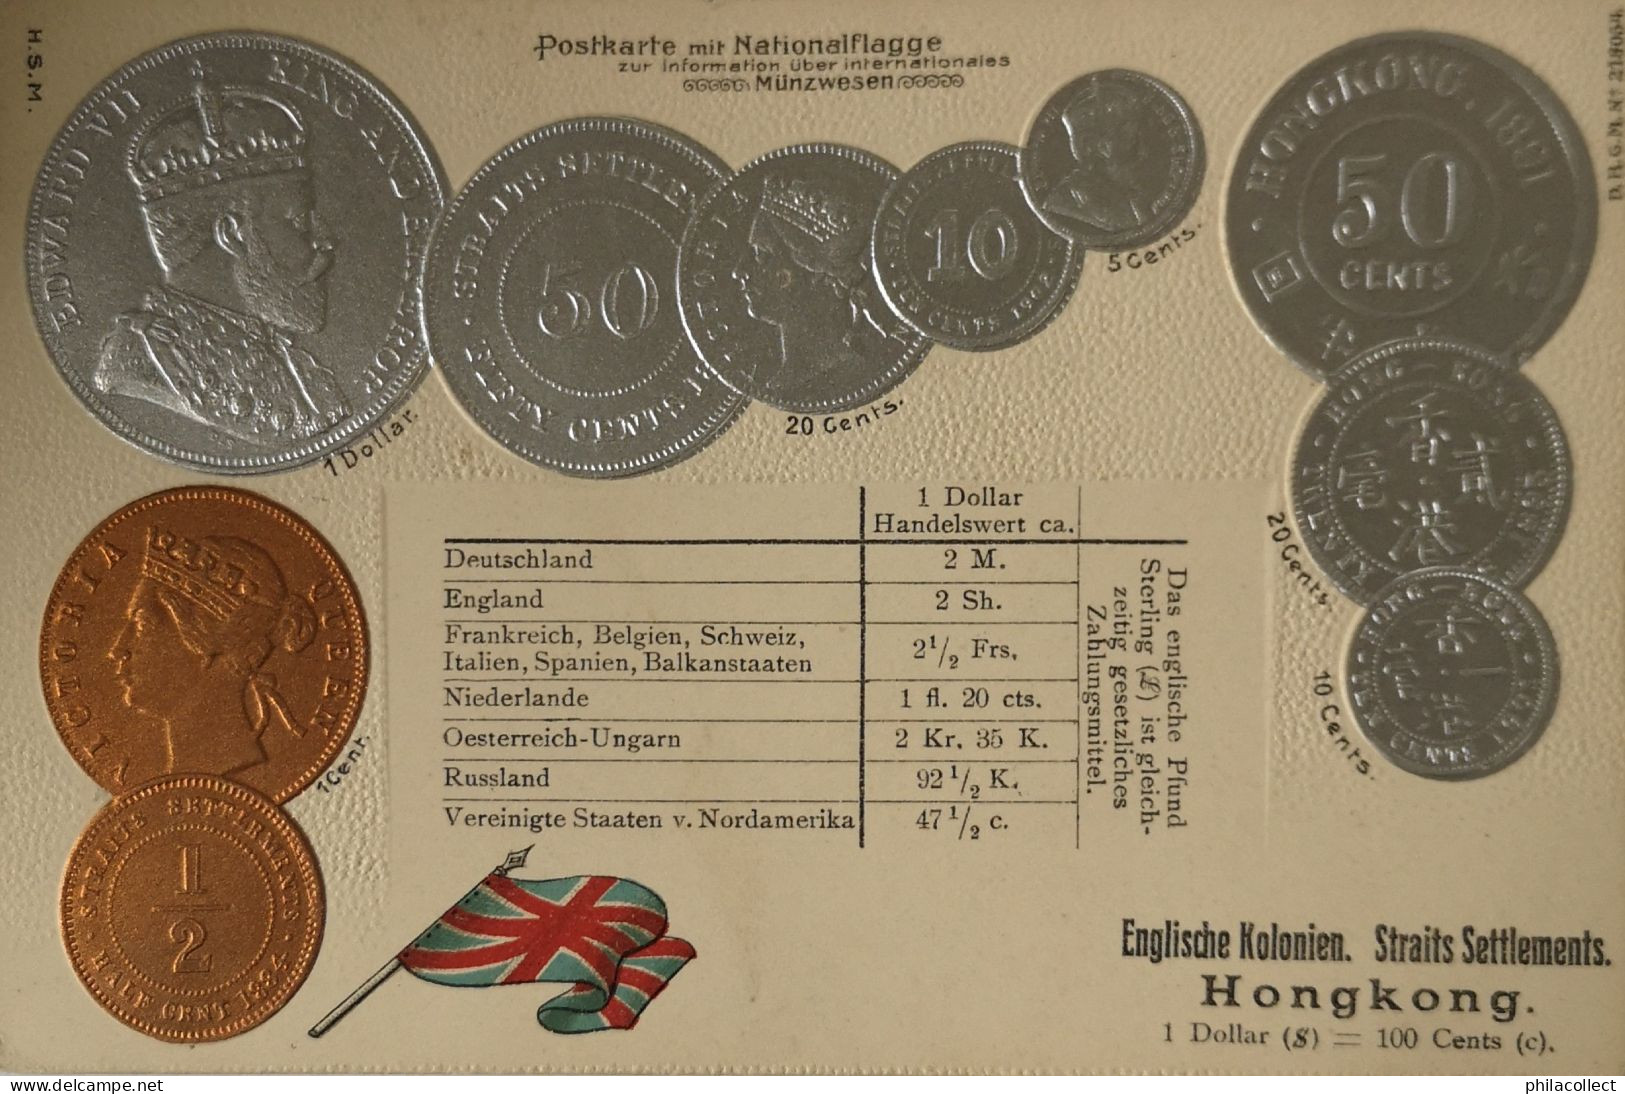 Hong Kong  // Münzkarte Prägedruck - Coin Card Embossed  19?? - China (Hong Kong)